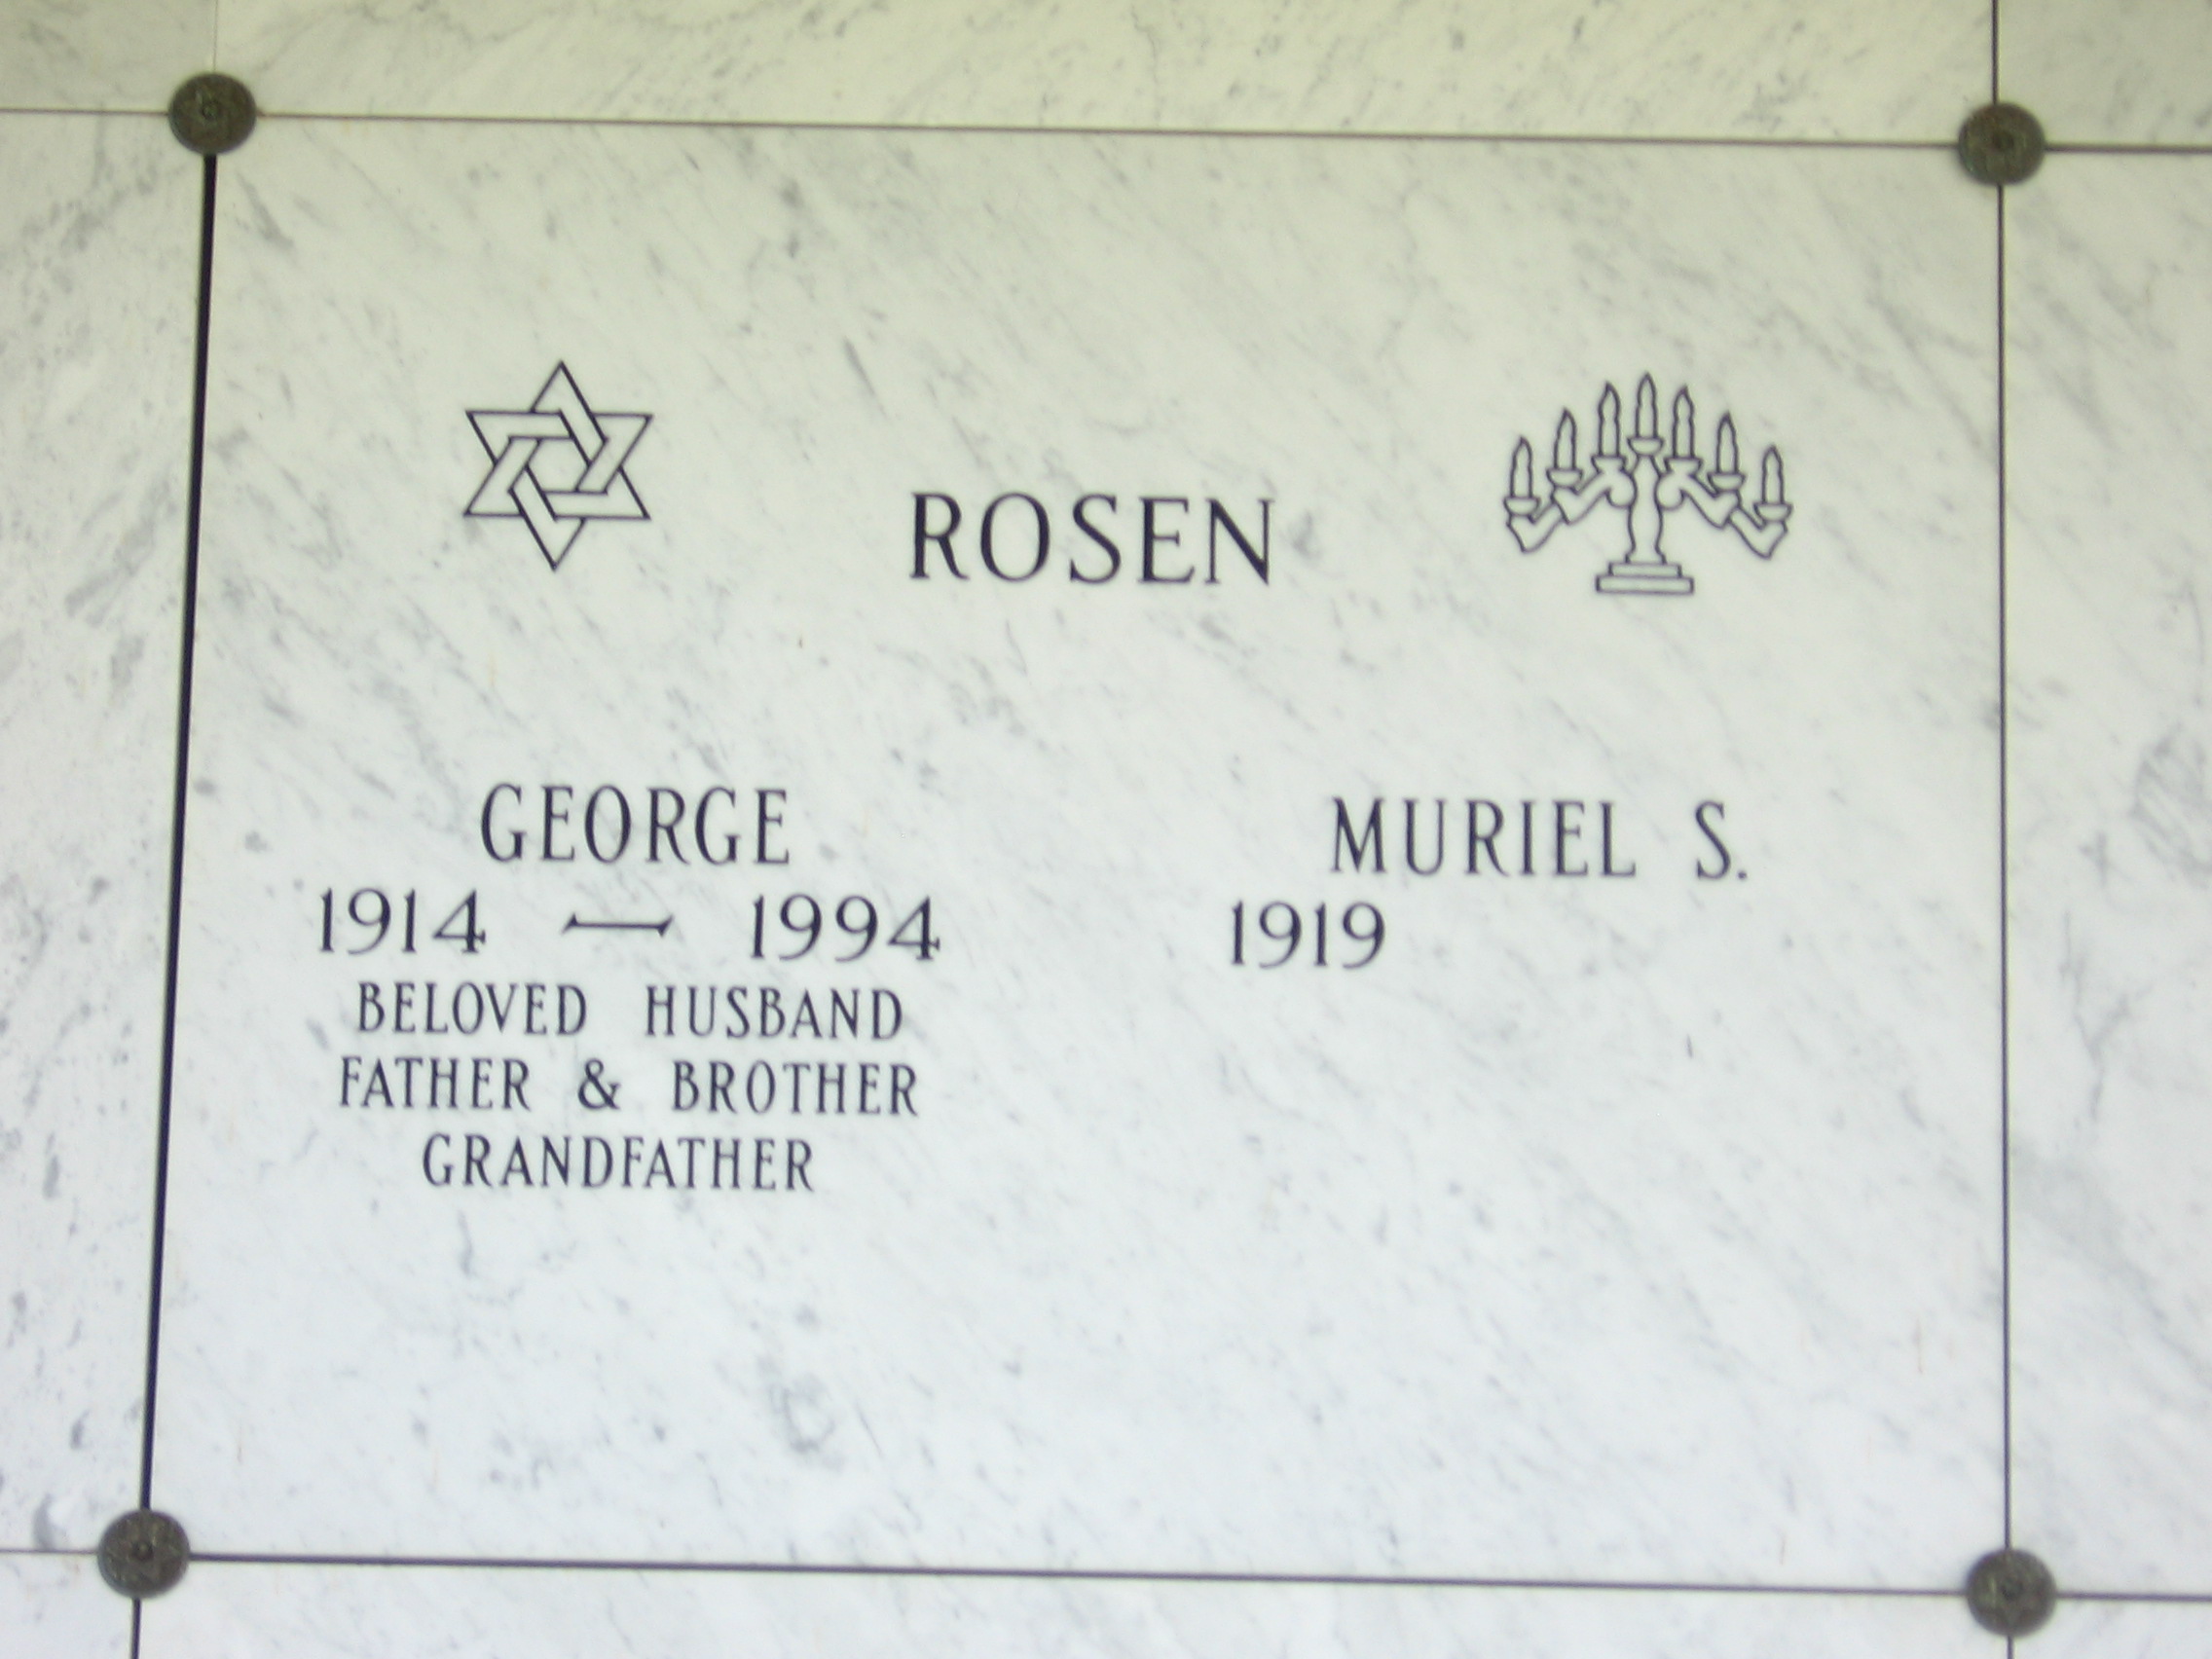 Muriel S Rosen